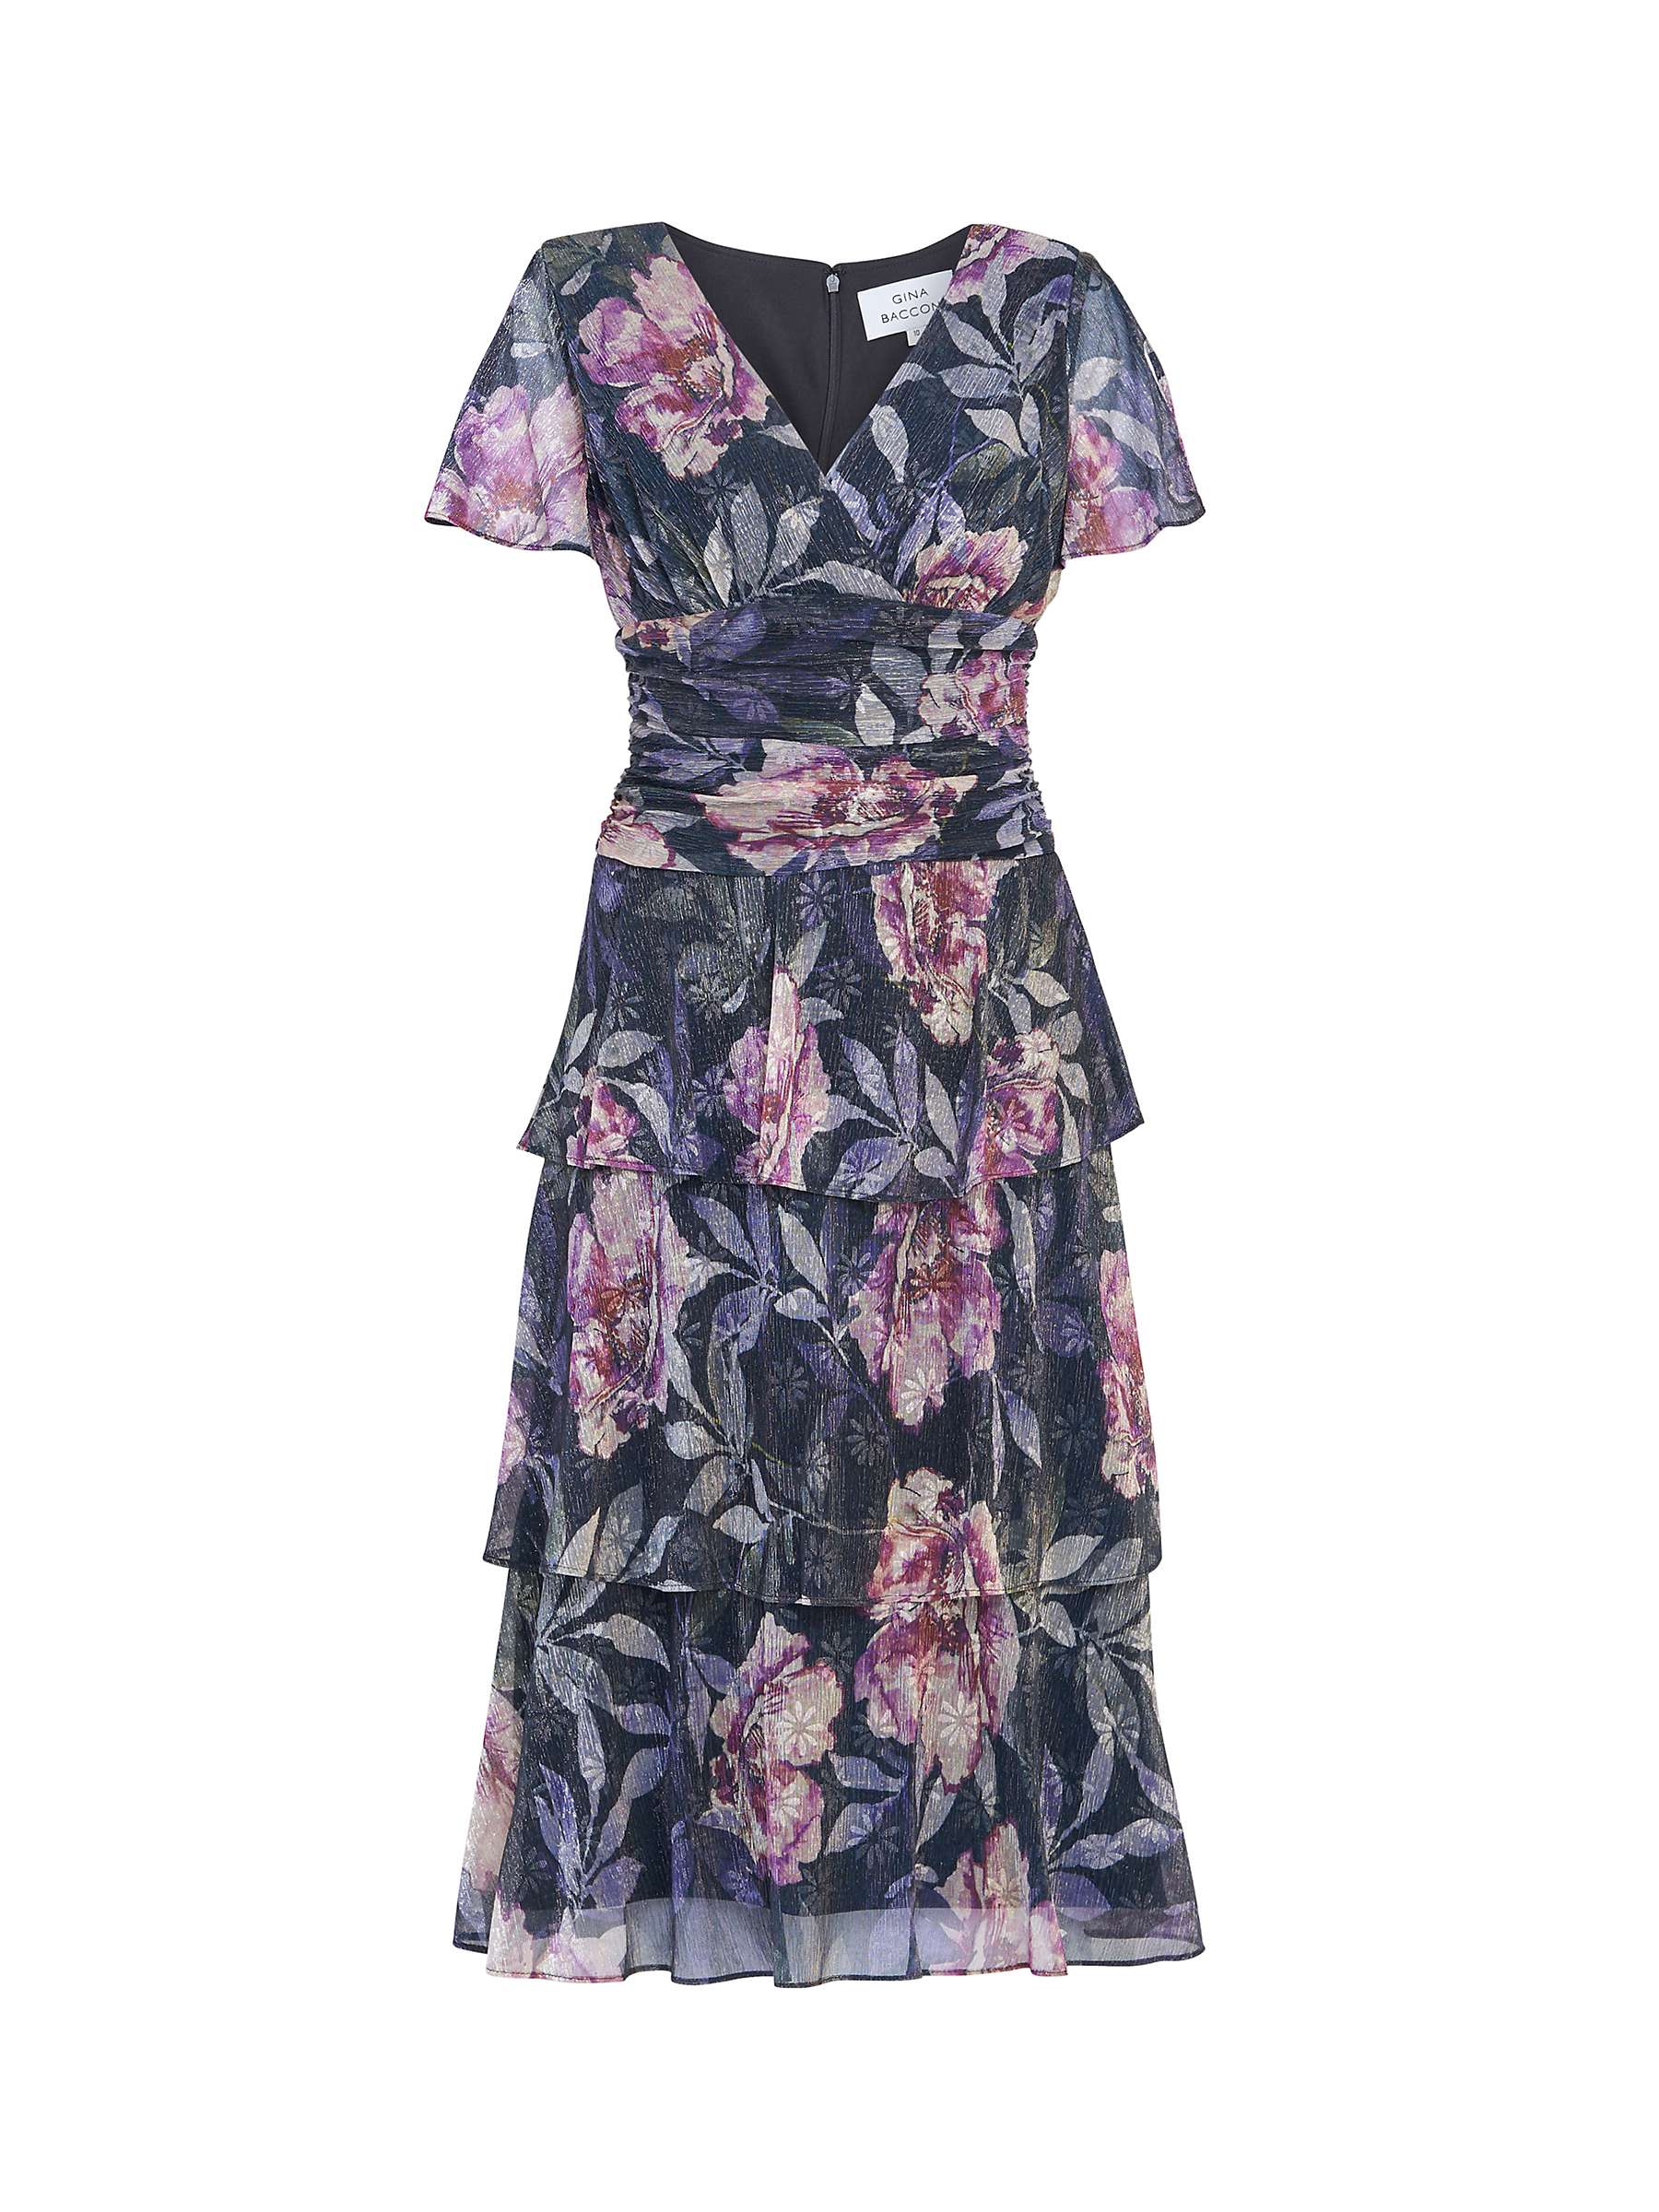 Buy Gina Bacconi Katy Floral Metallic Midi Dress, Black/Multi Online at johnlewis.com